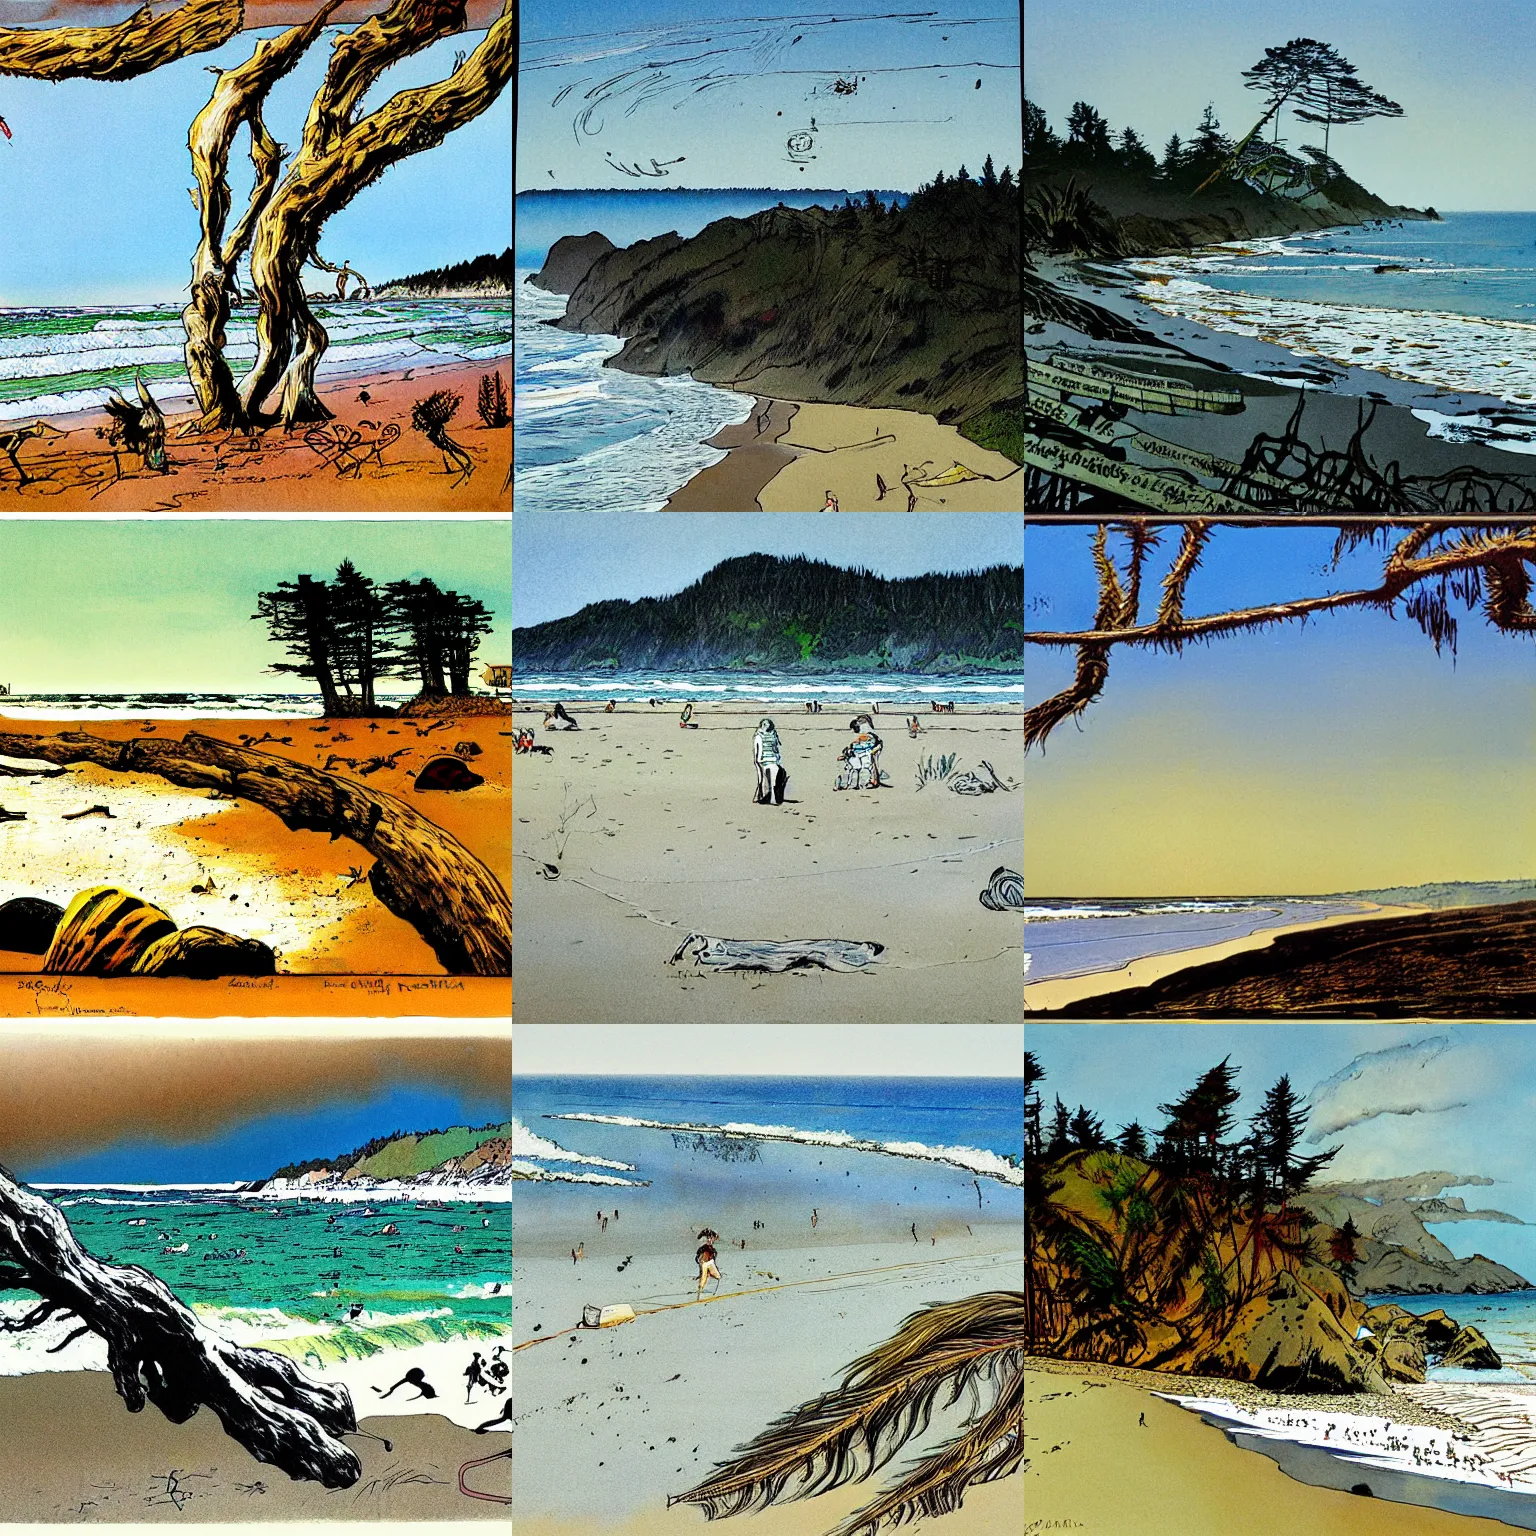 Prompt: humboldt county California Beach, by Ralph steadman